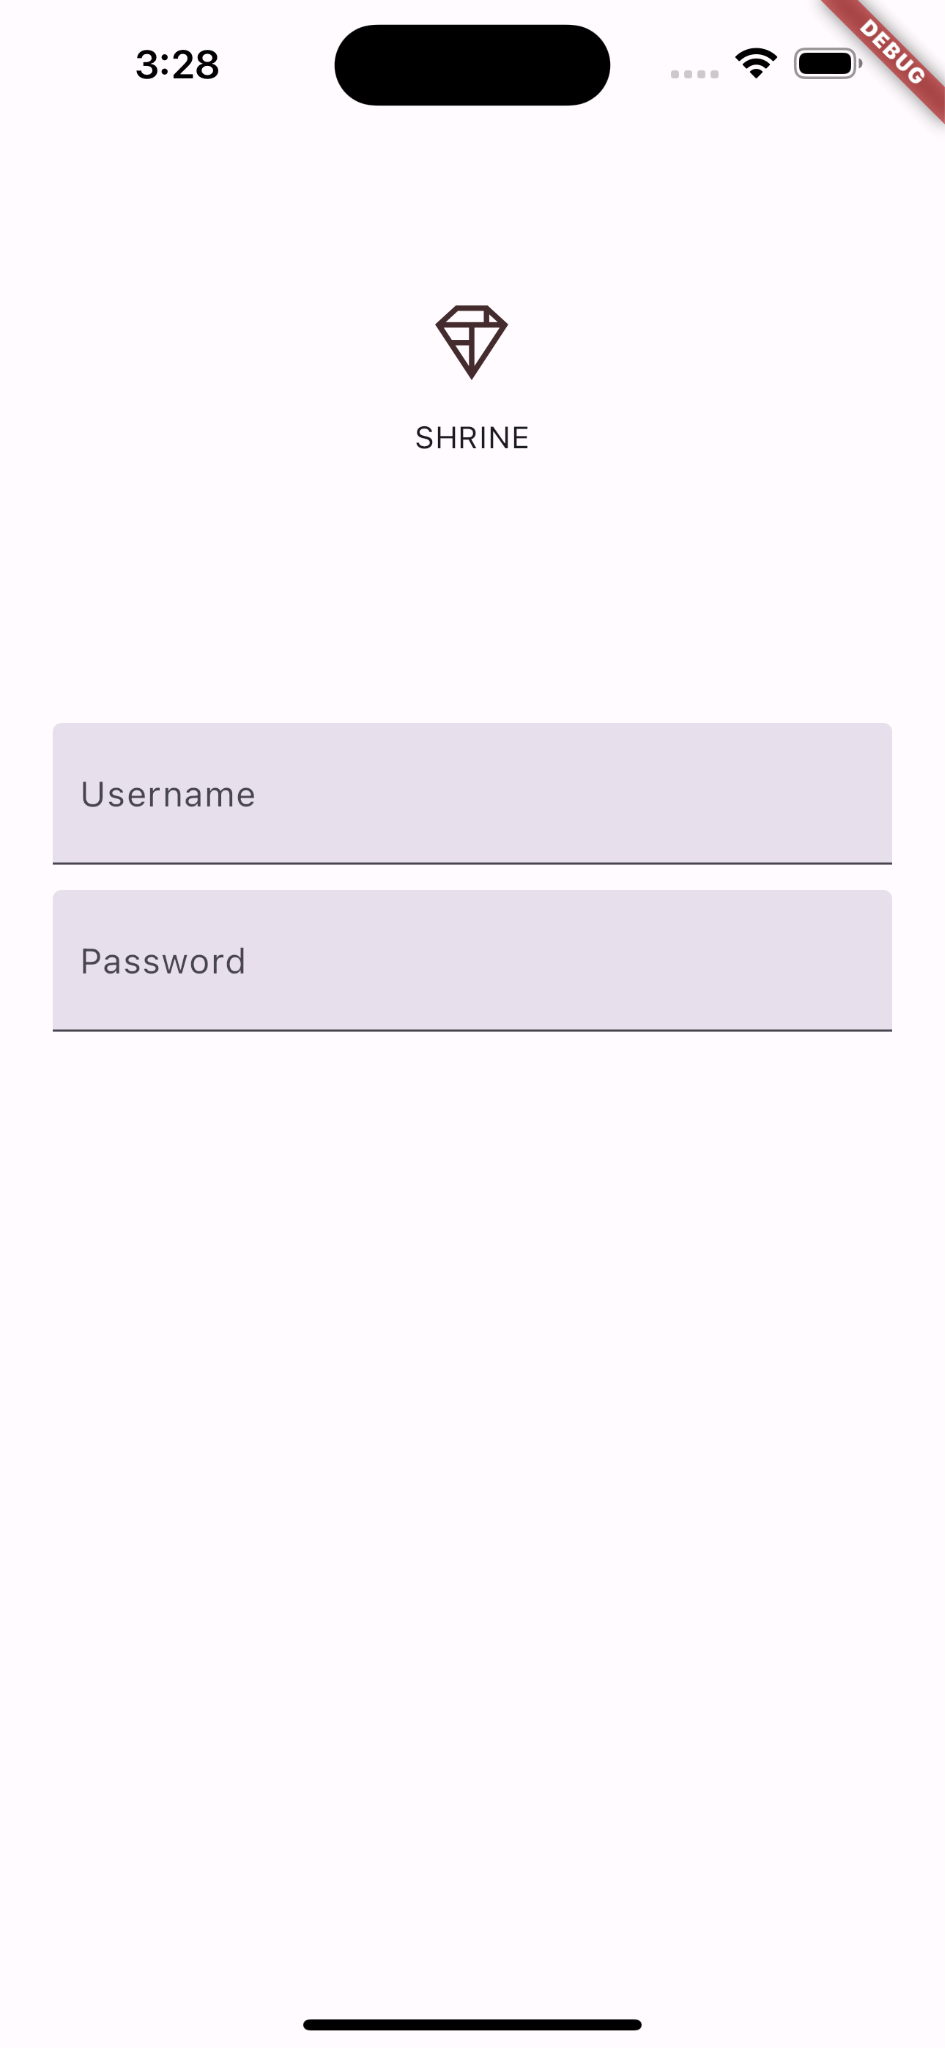 Shrine logo with username and password fields